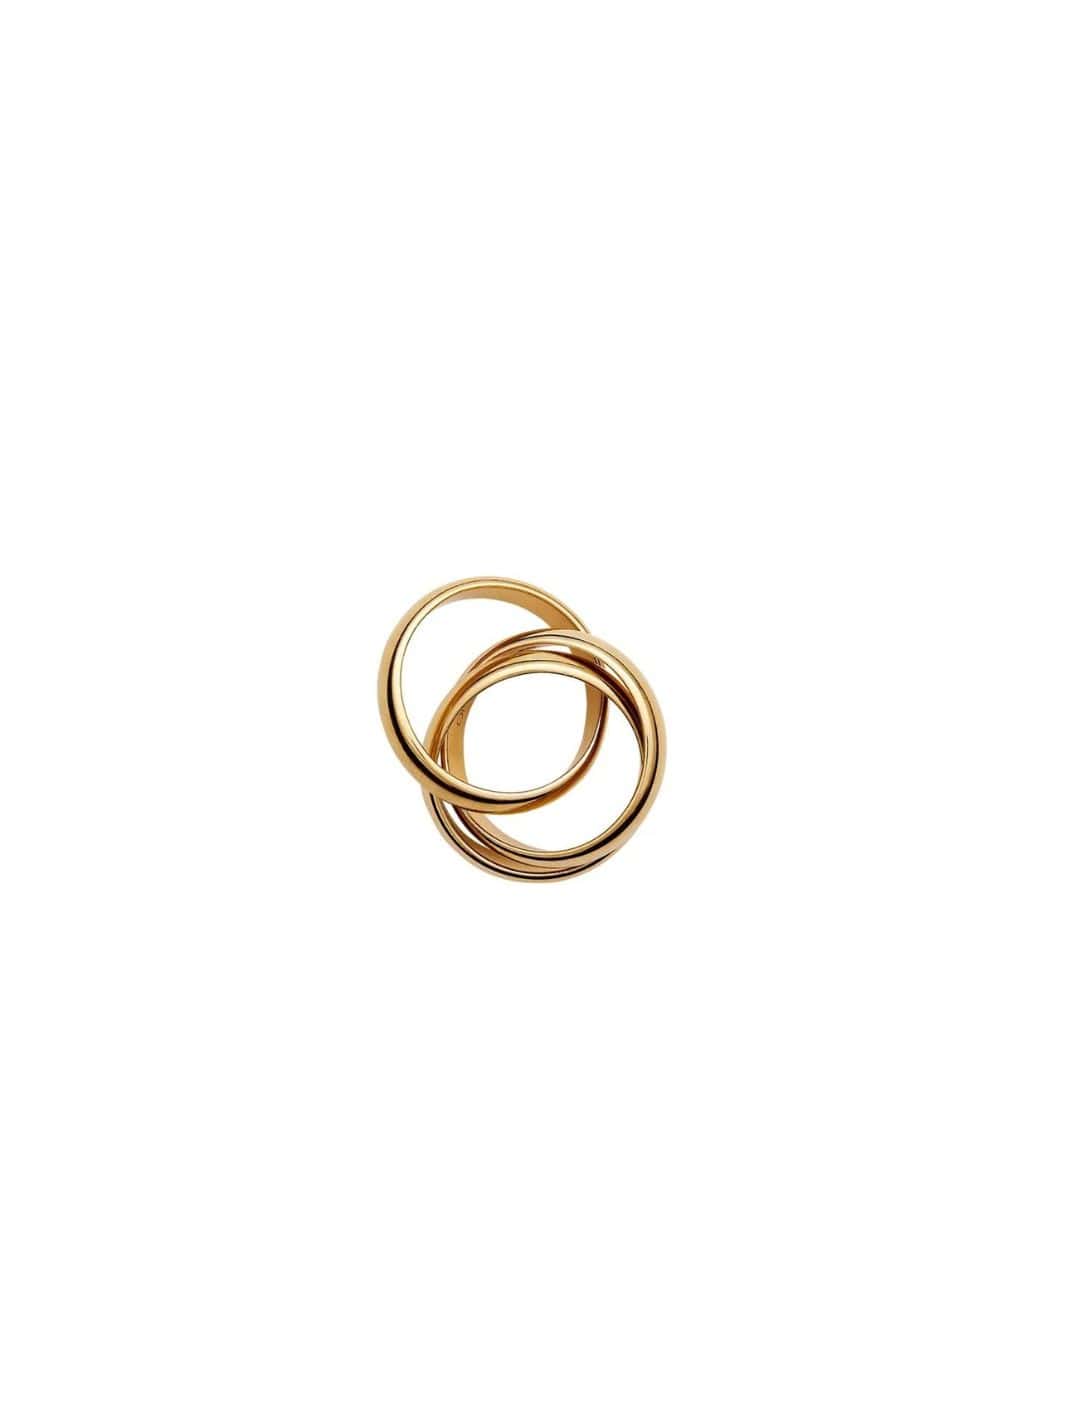 Lié Studio Accessories Ring | The Sofie Ring Gold